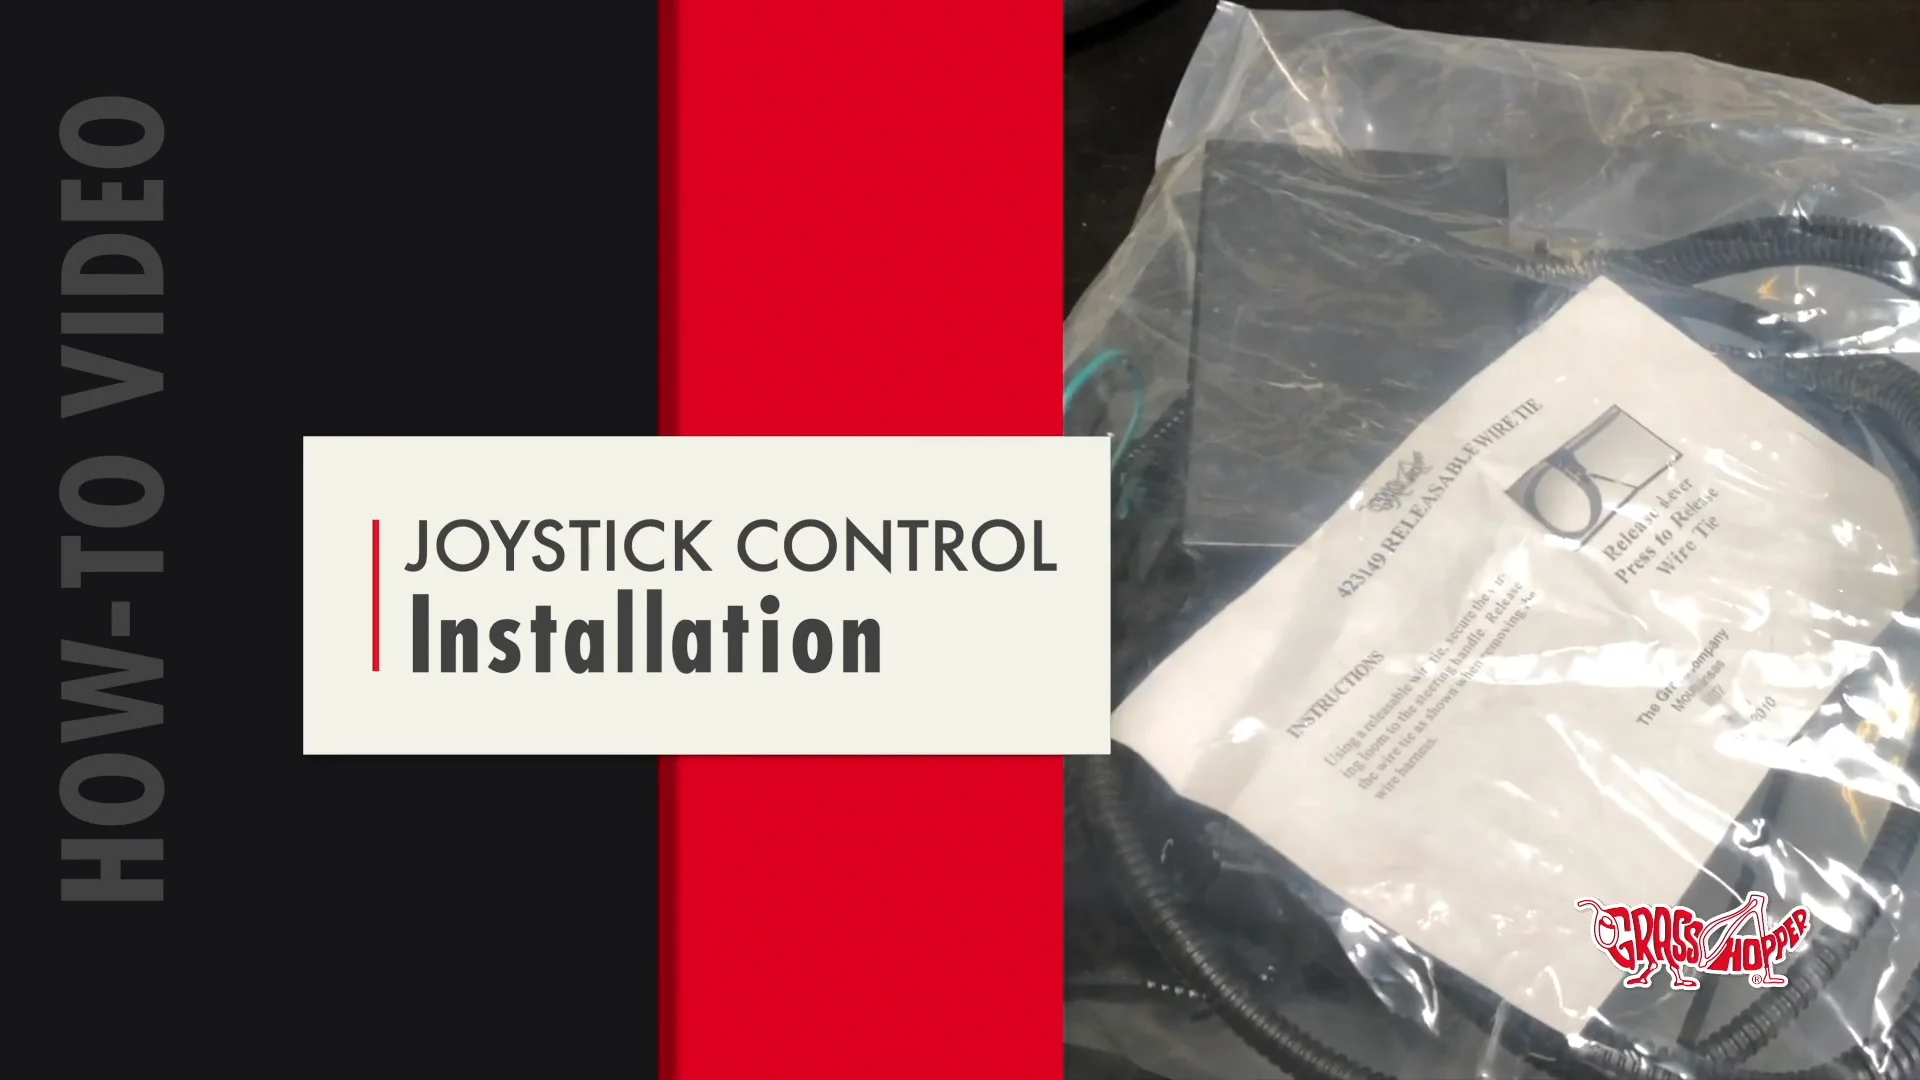 How to: Joystick Control Installation on Vimeo